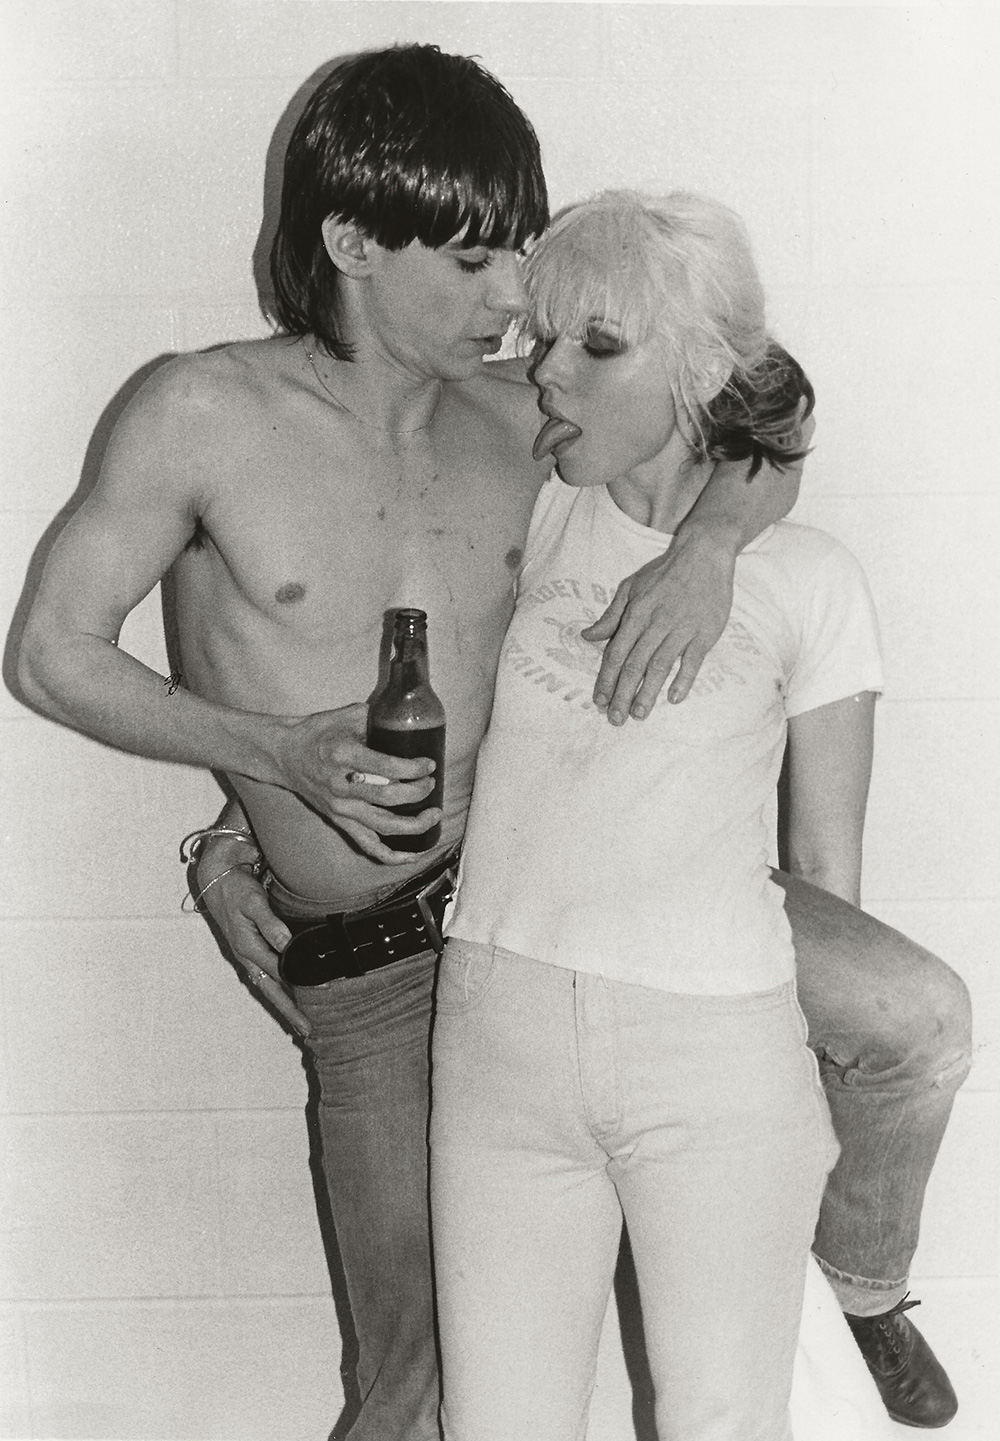 Debbie Harry and Iggy Pop